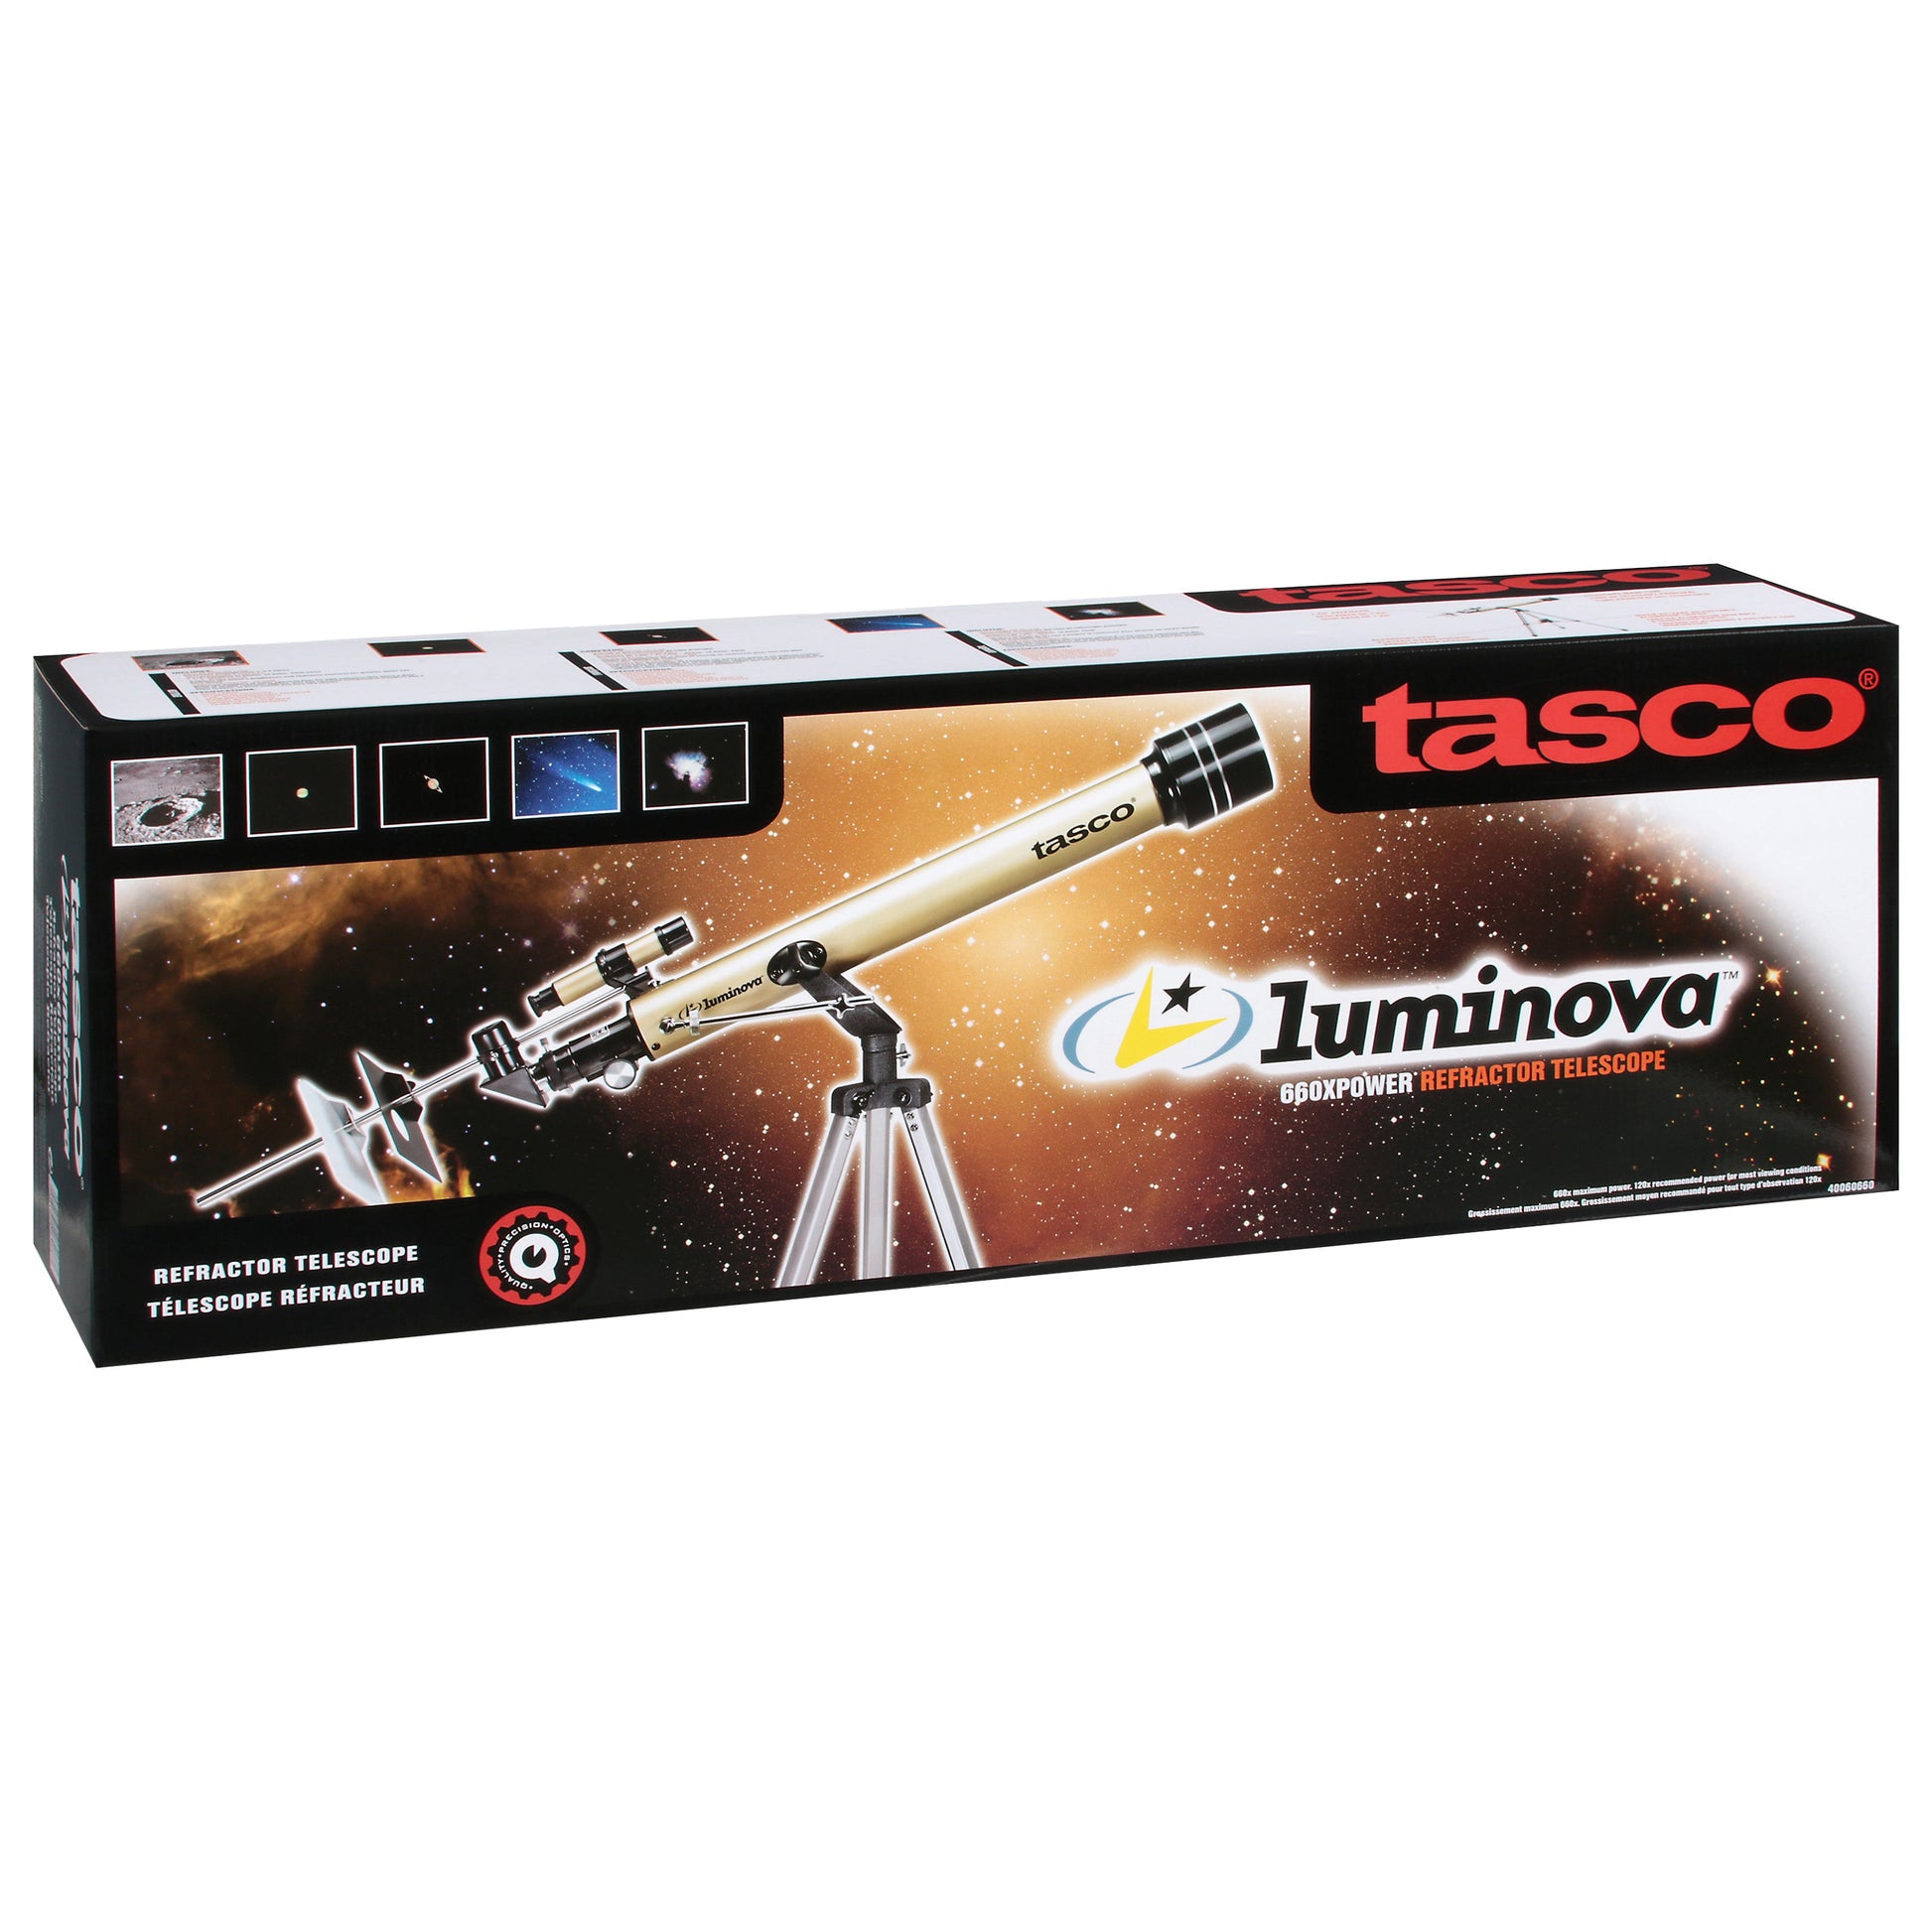 TASCO 40060660 Tasco Luminova Telescopes - 800Mm X 60Mm - BH40060660